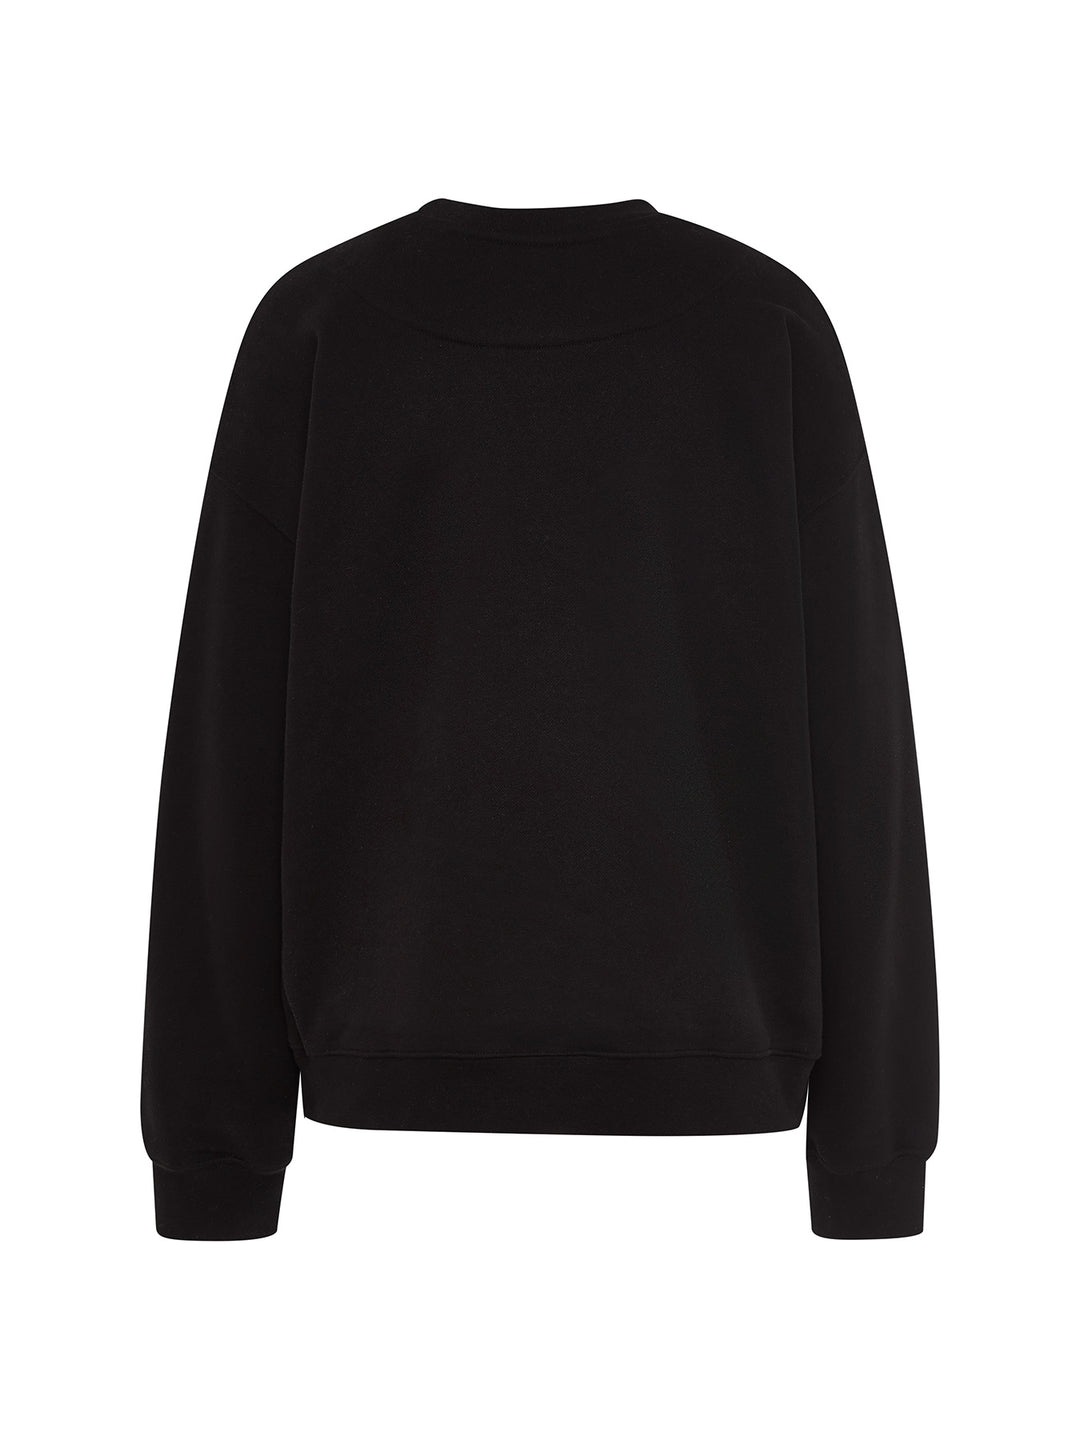 CHARLOTTE - Sweatshirt, Black